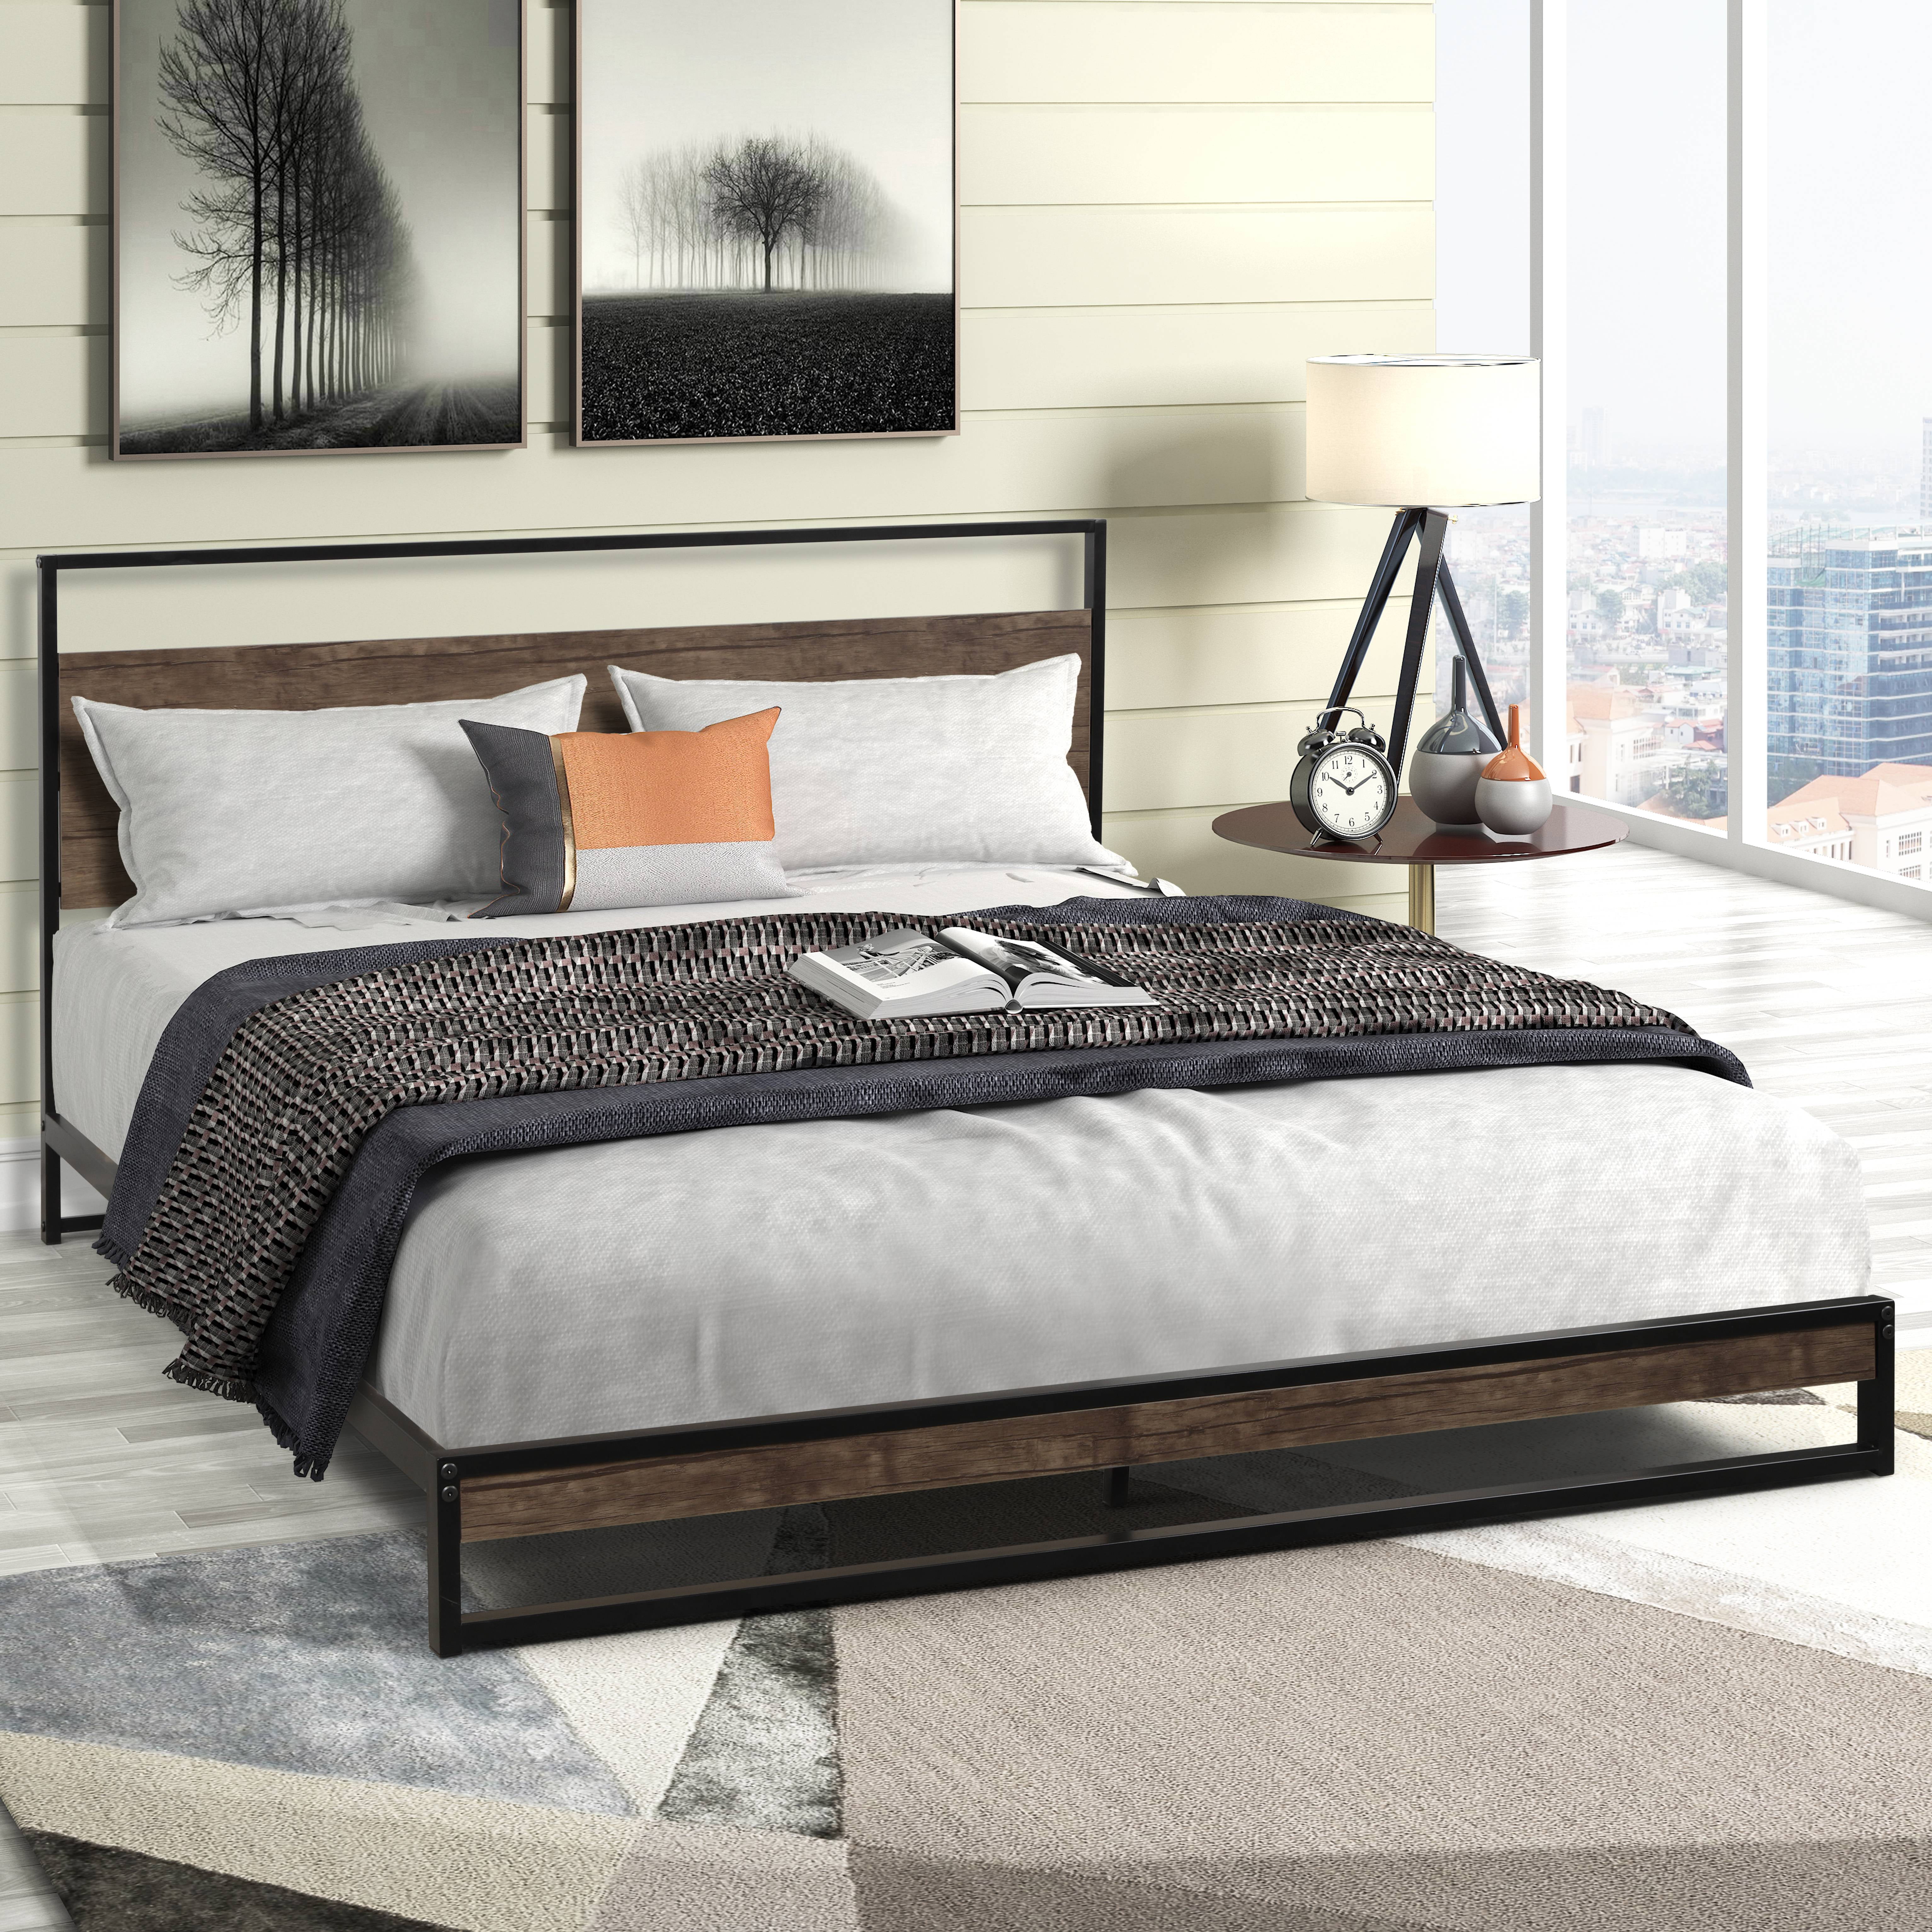 Twin/Full/Queen Size Metal Platform Bed Frame w/Wood Slat Bedroom Furniture 